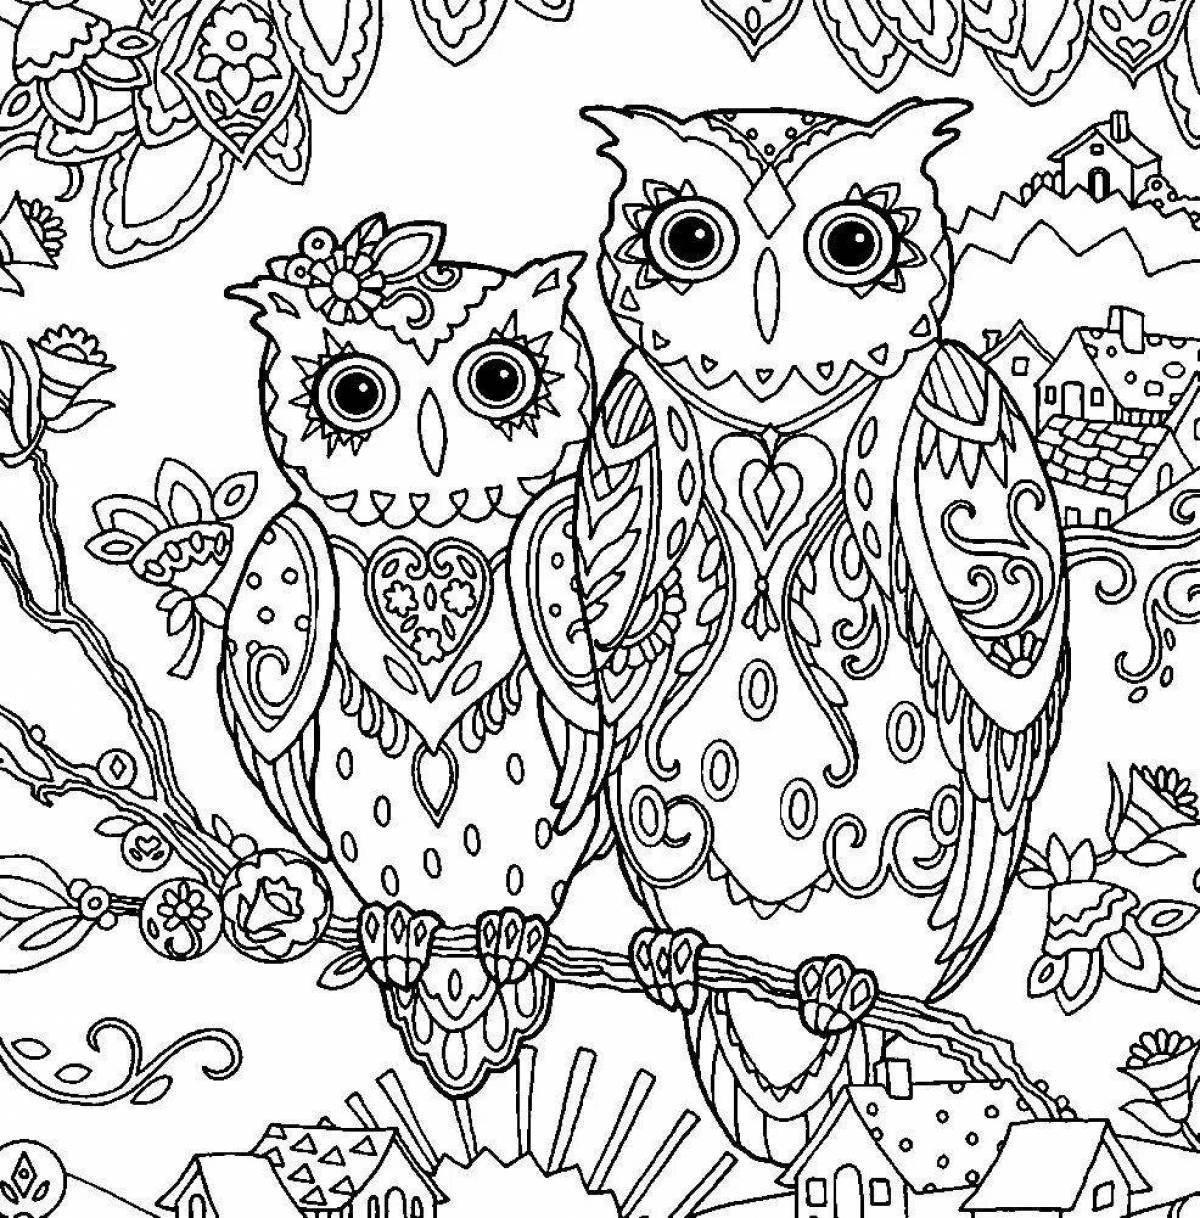 Fancy coloring complex owl